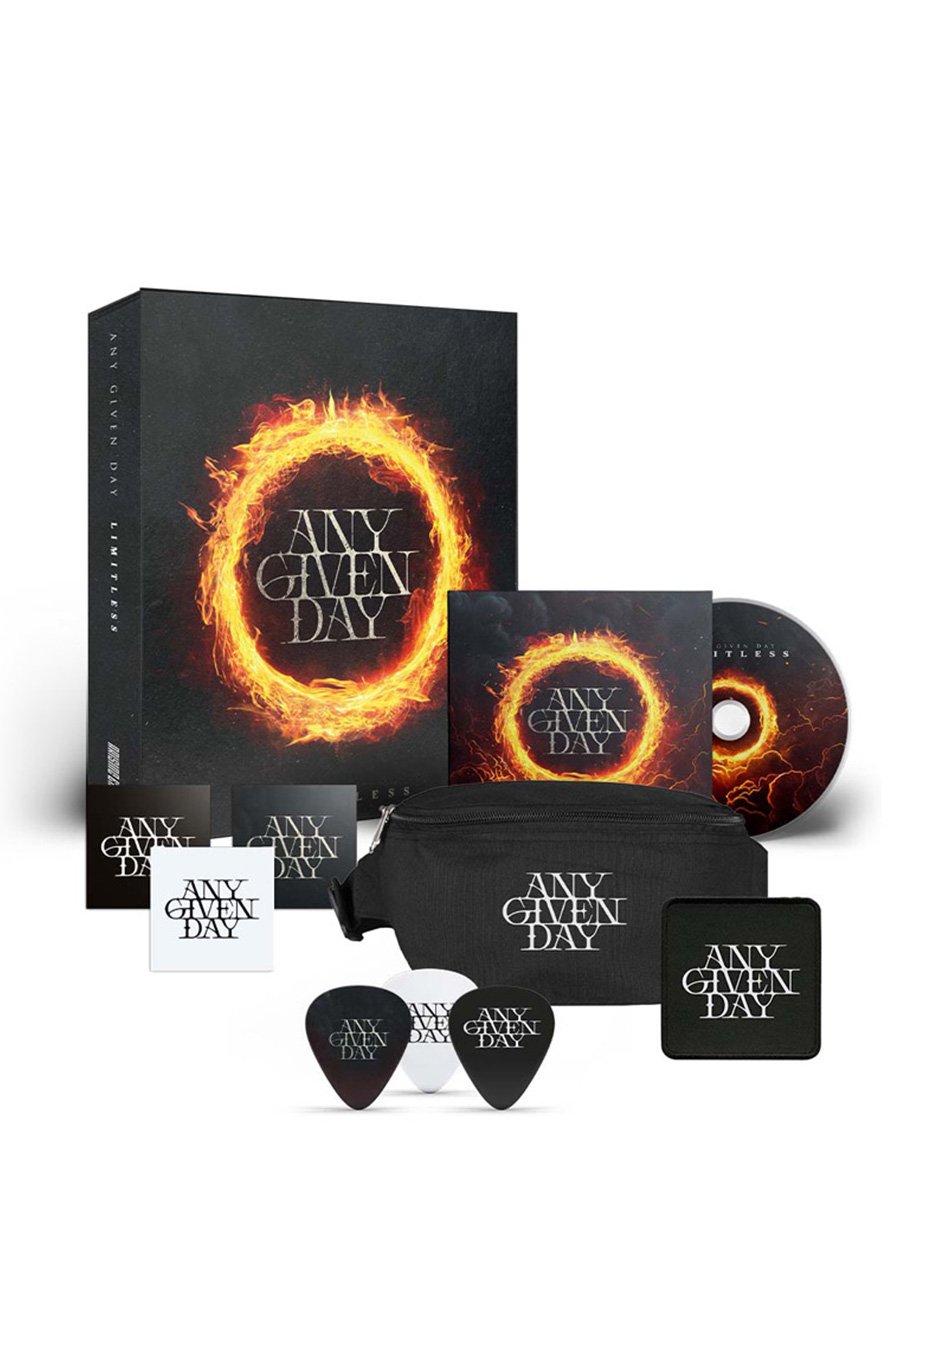 Any Given Day - Limitless Ltd. Fan Box - CD Boxset